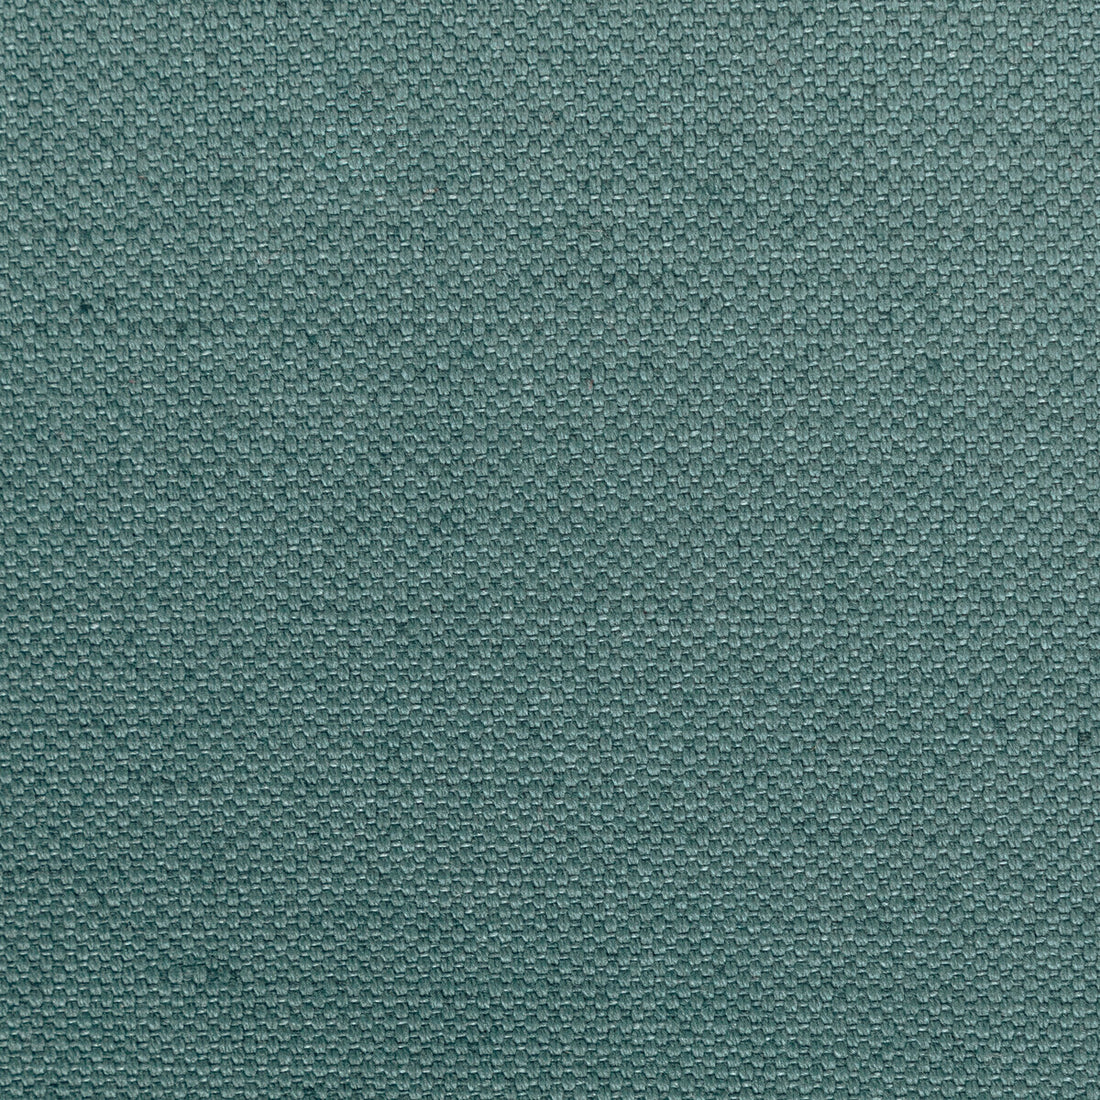 Carson fabric in thunder color - pattern 36282.521.0 - by Kravet Basics